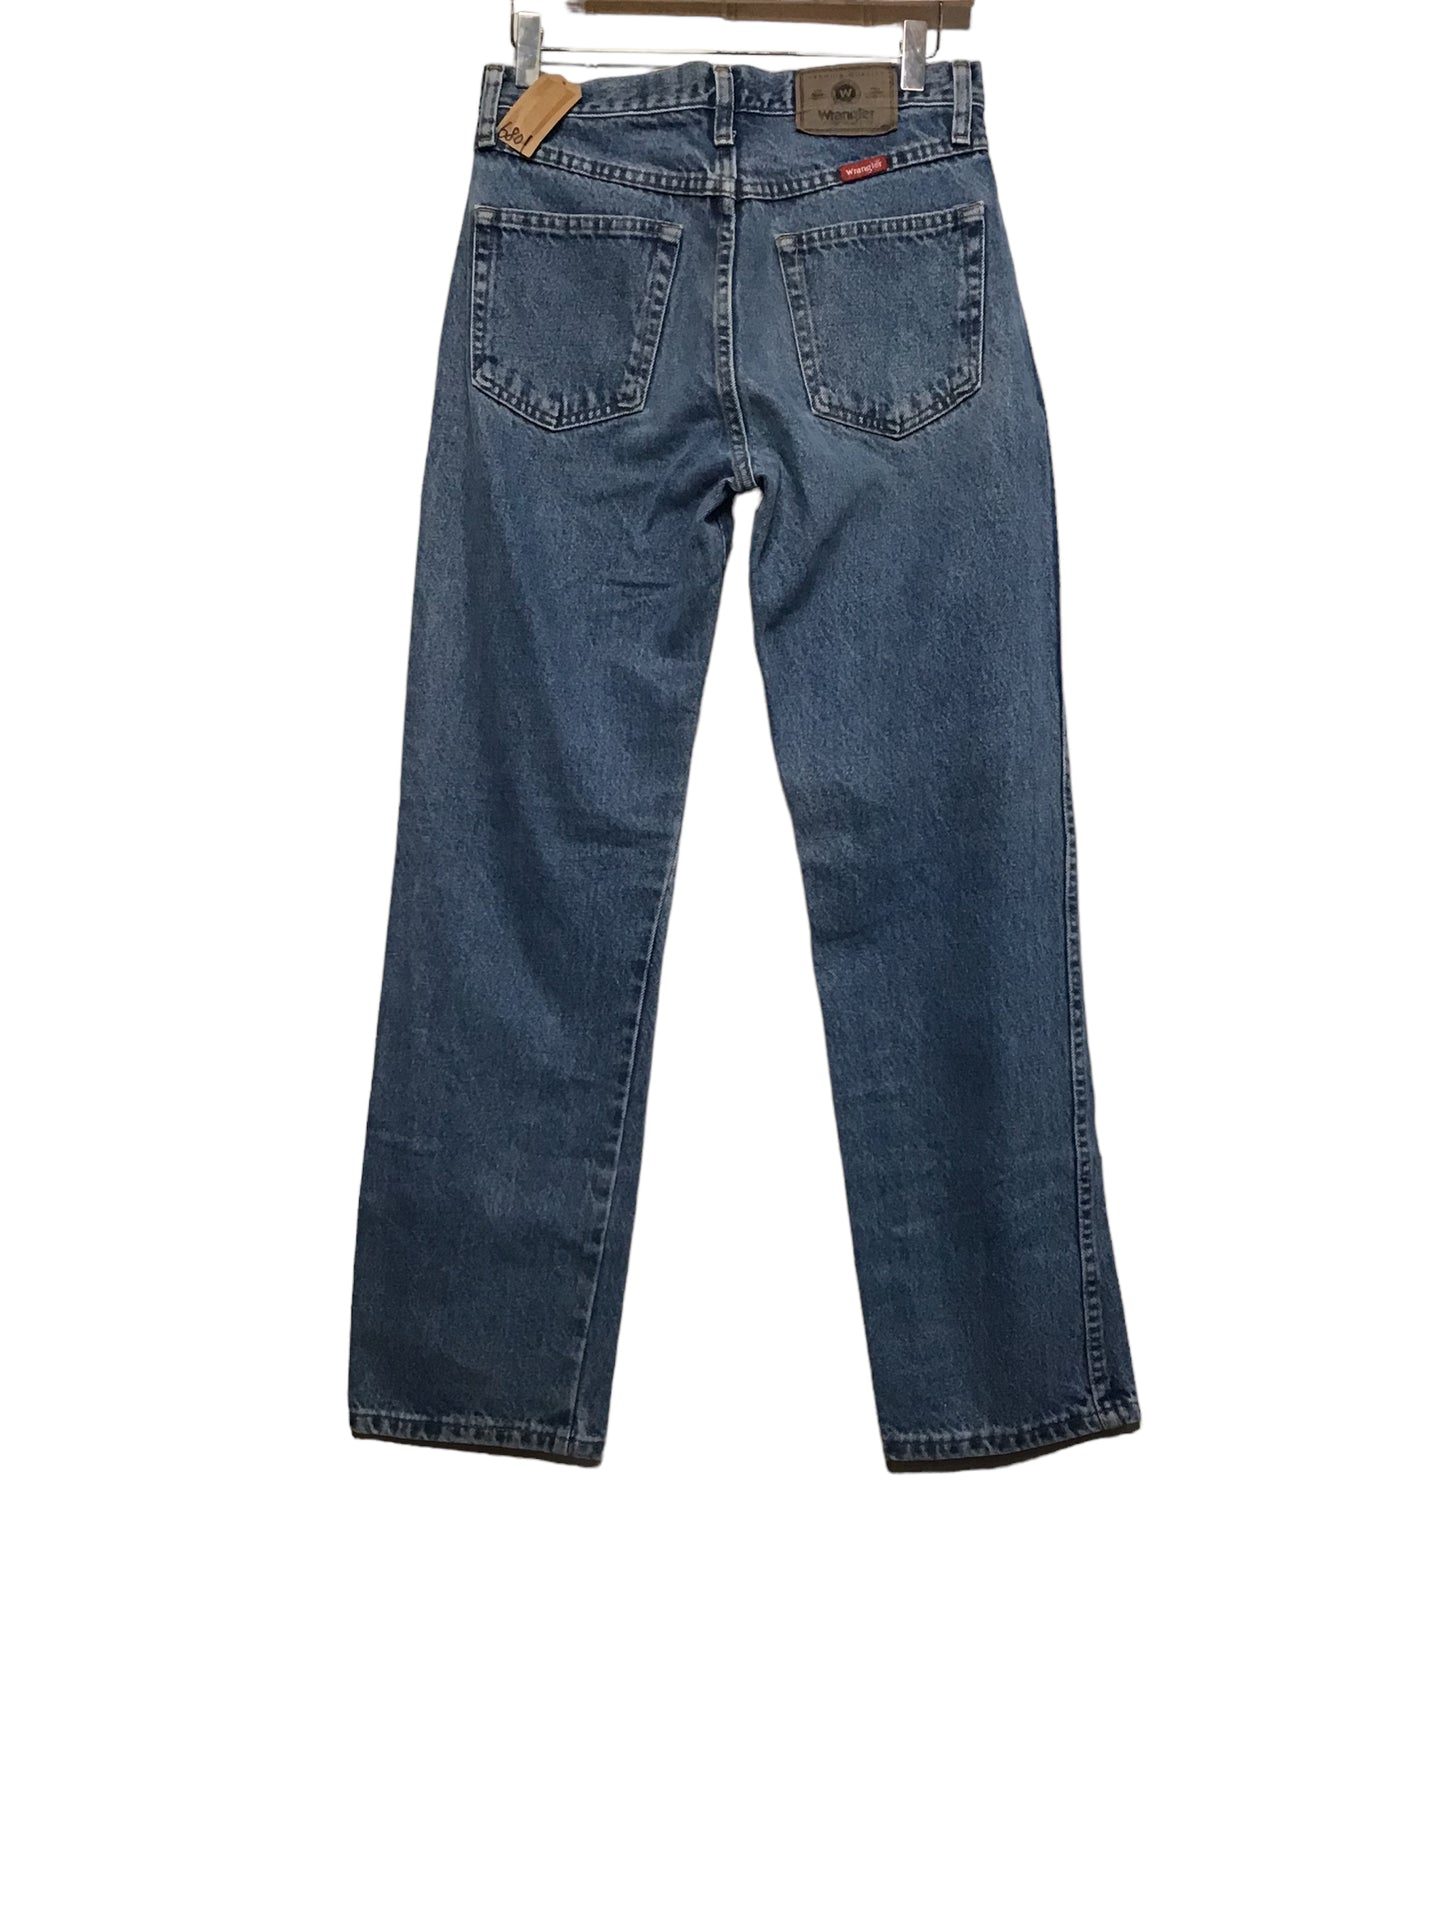 Wrangler Jeans (29x29)